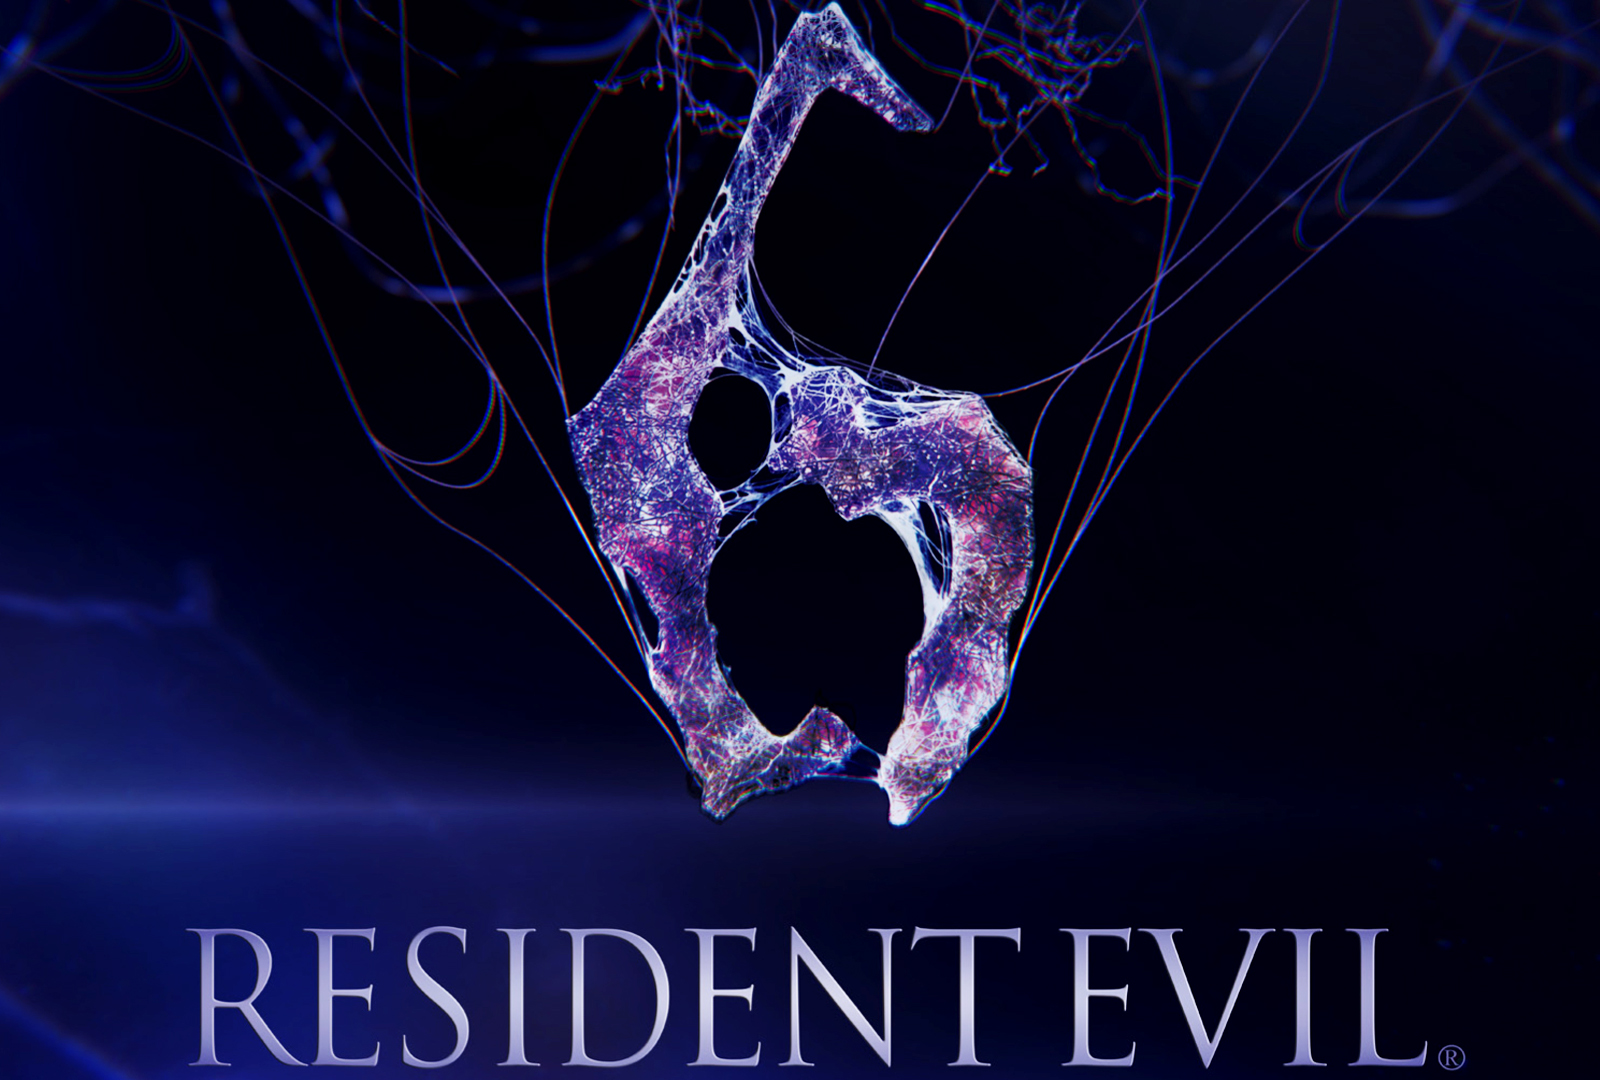 All New Pix1 HD Wallpaper Resident Evil